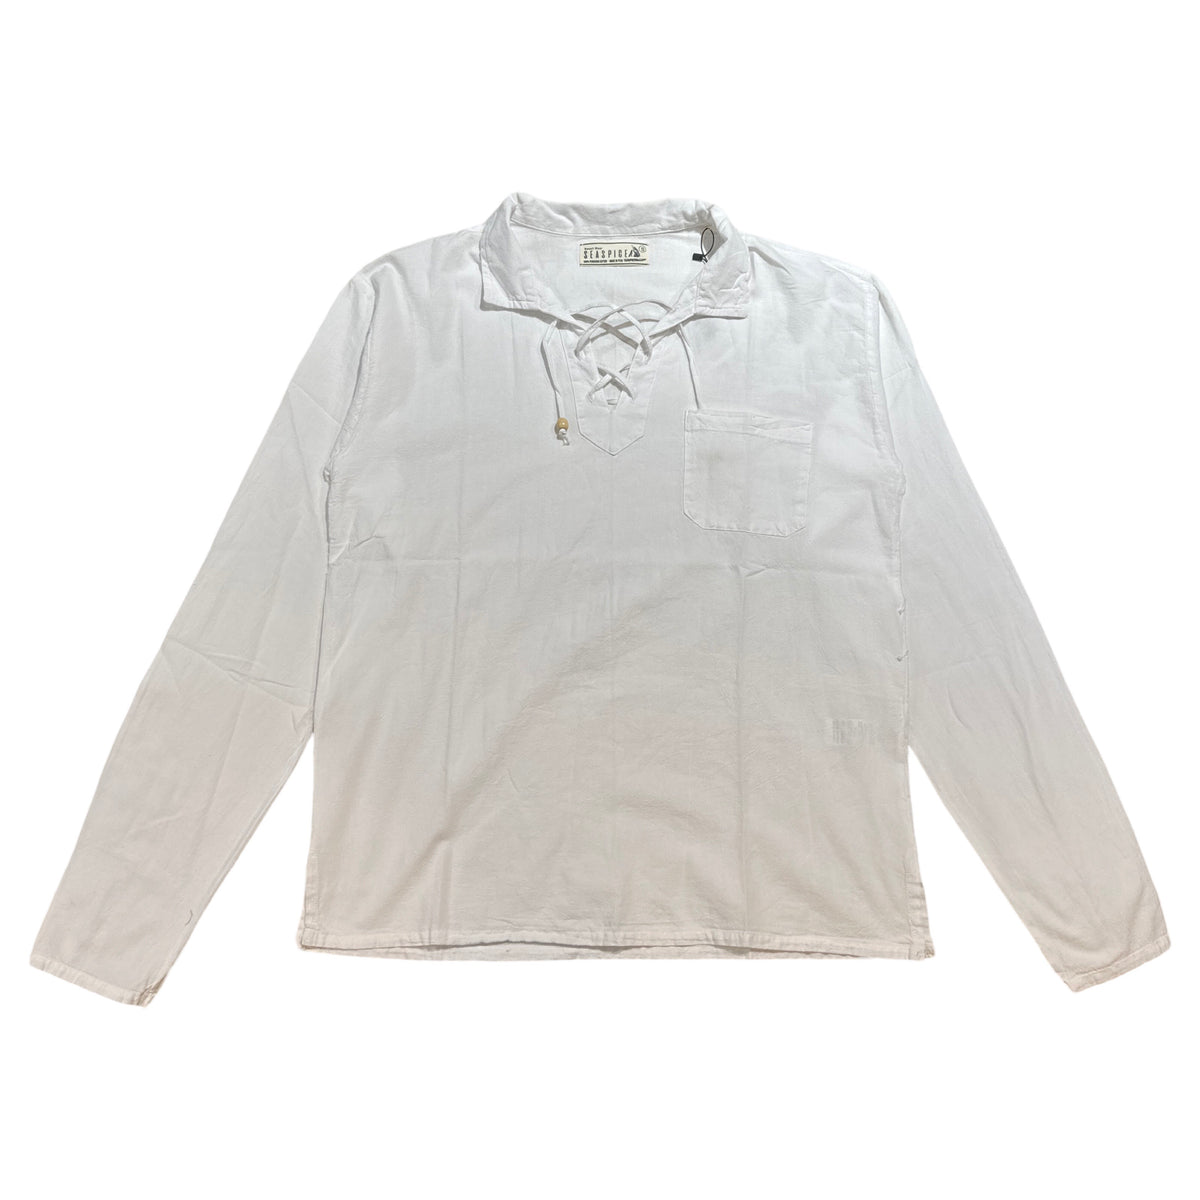 Seaspice White Boho Peruvian Cotton Long Sleeve Shirt